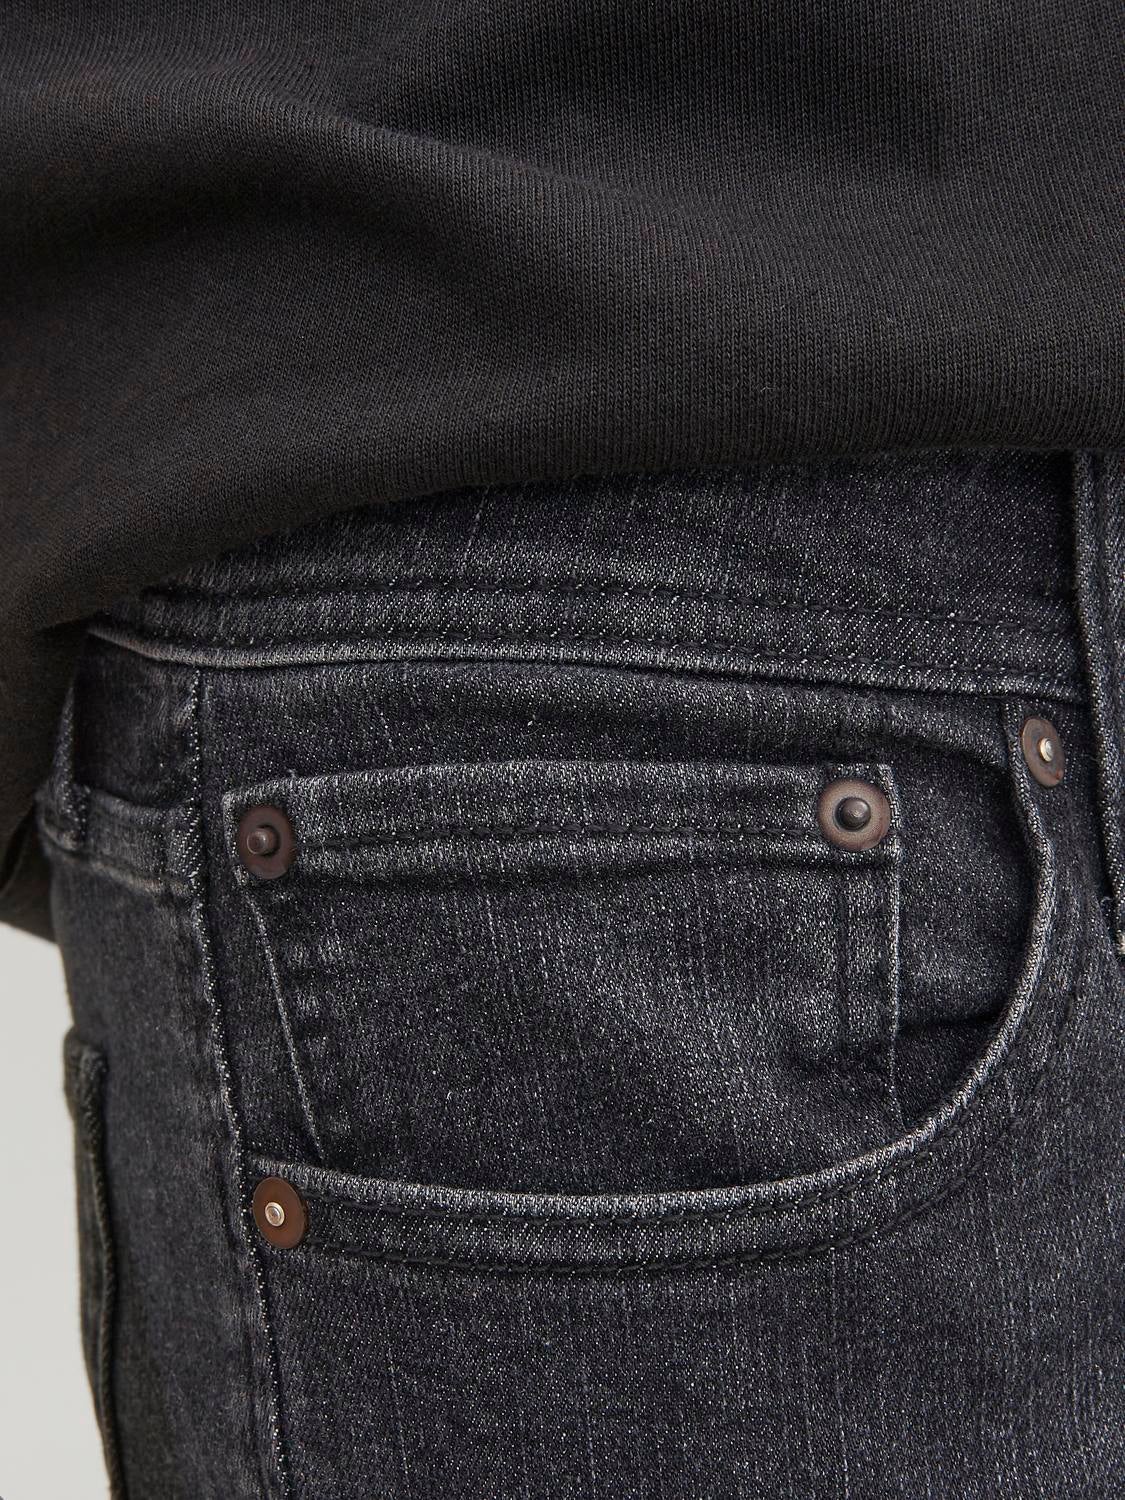 PURPLE Men's P001 Black Resin Skinny Jeans | Neiman Marcus